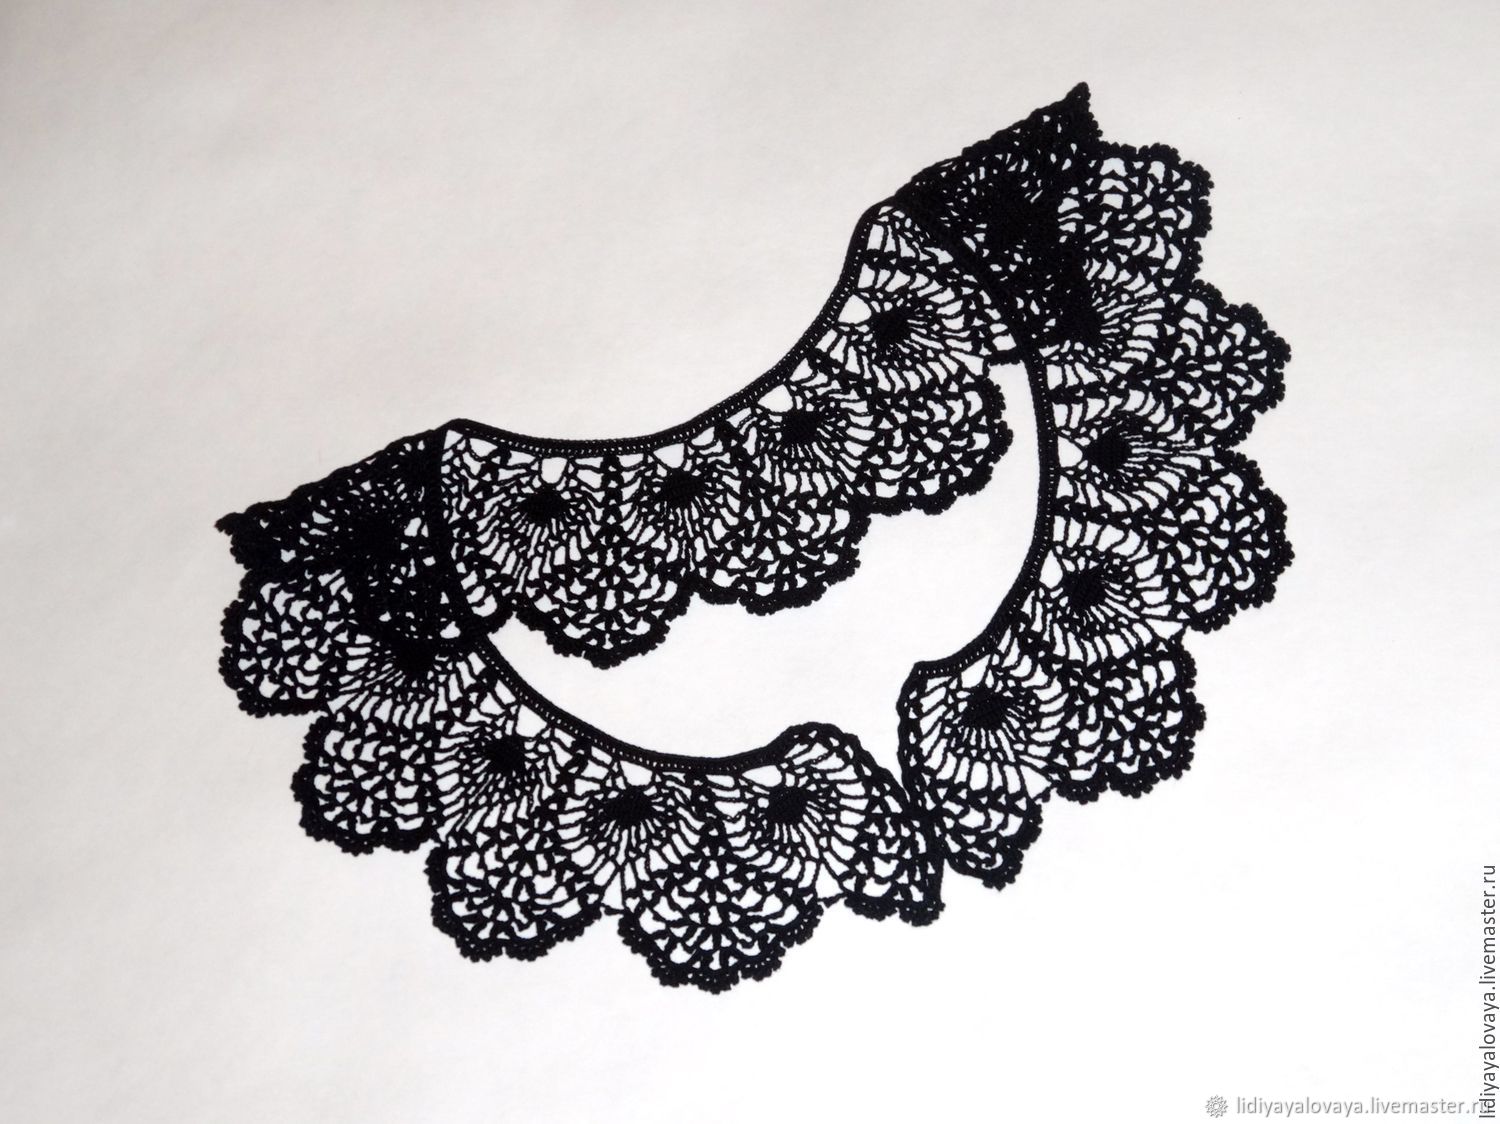 Sheer crochet lace kimono - 🧡 WISHLIST.RU КИМОНО ИЗ КРУЖЕВА PRECIOUS LACE.